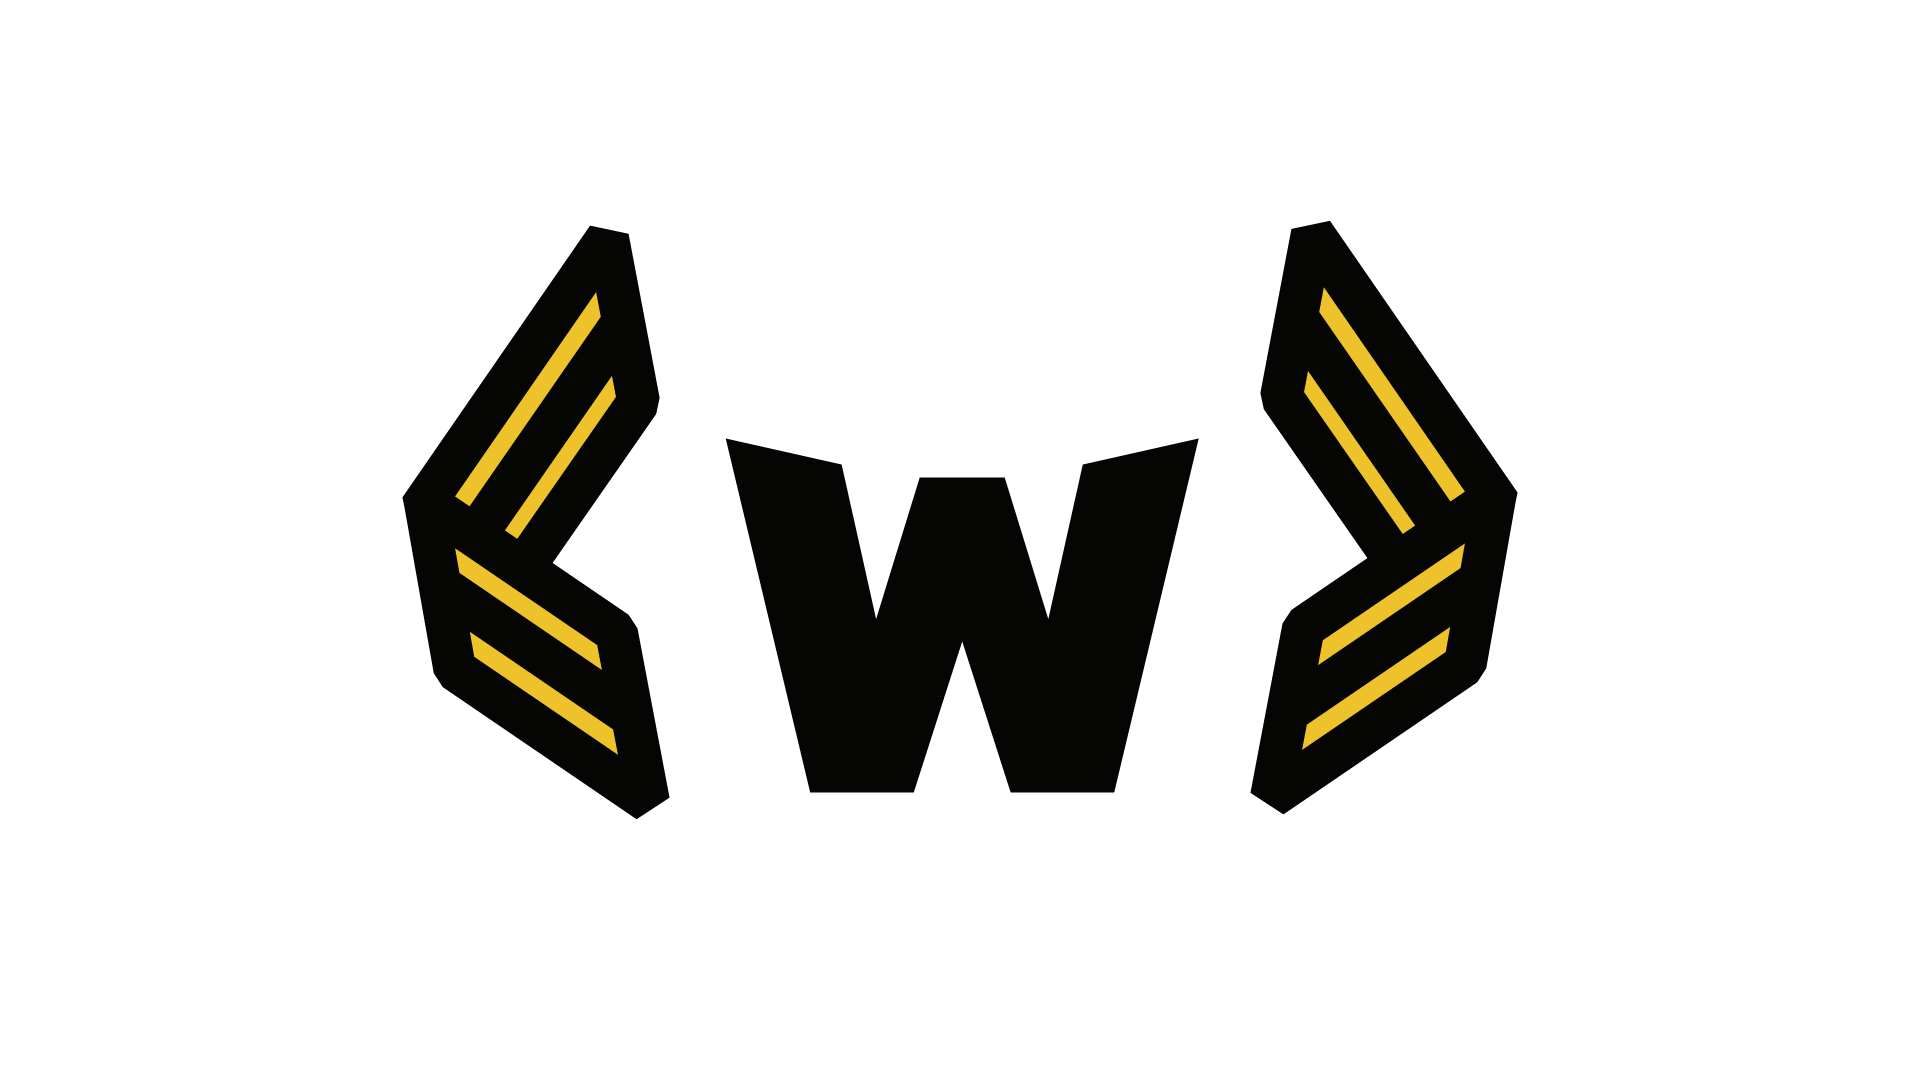 Wegkapitein logo using it's two main colours: black and yellow